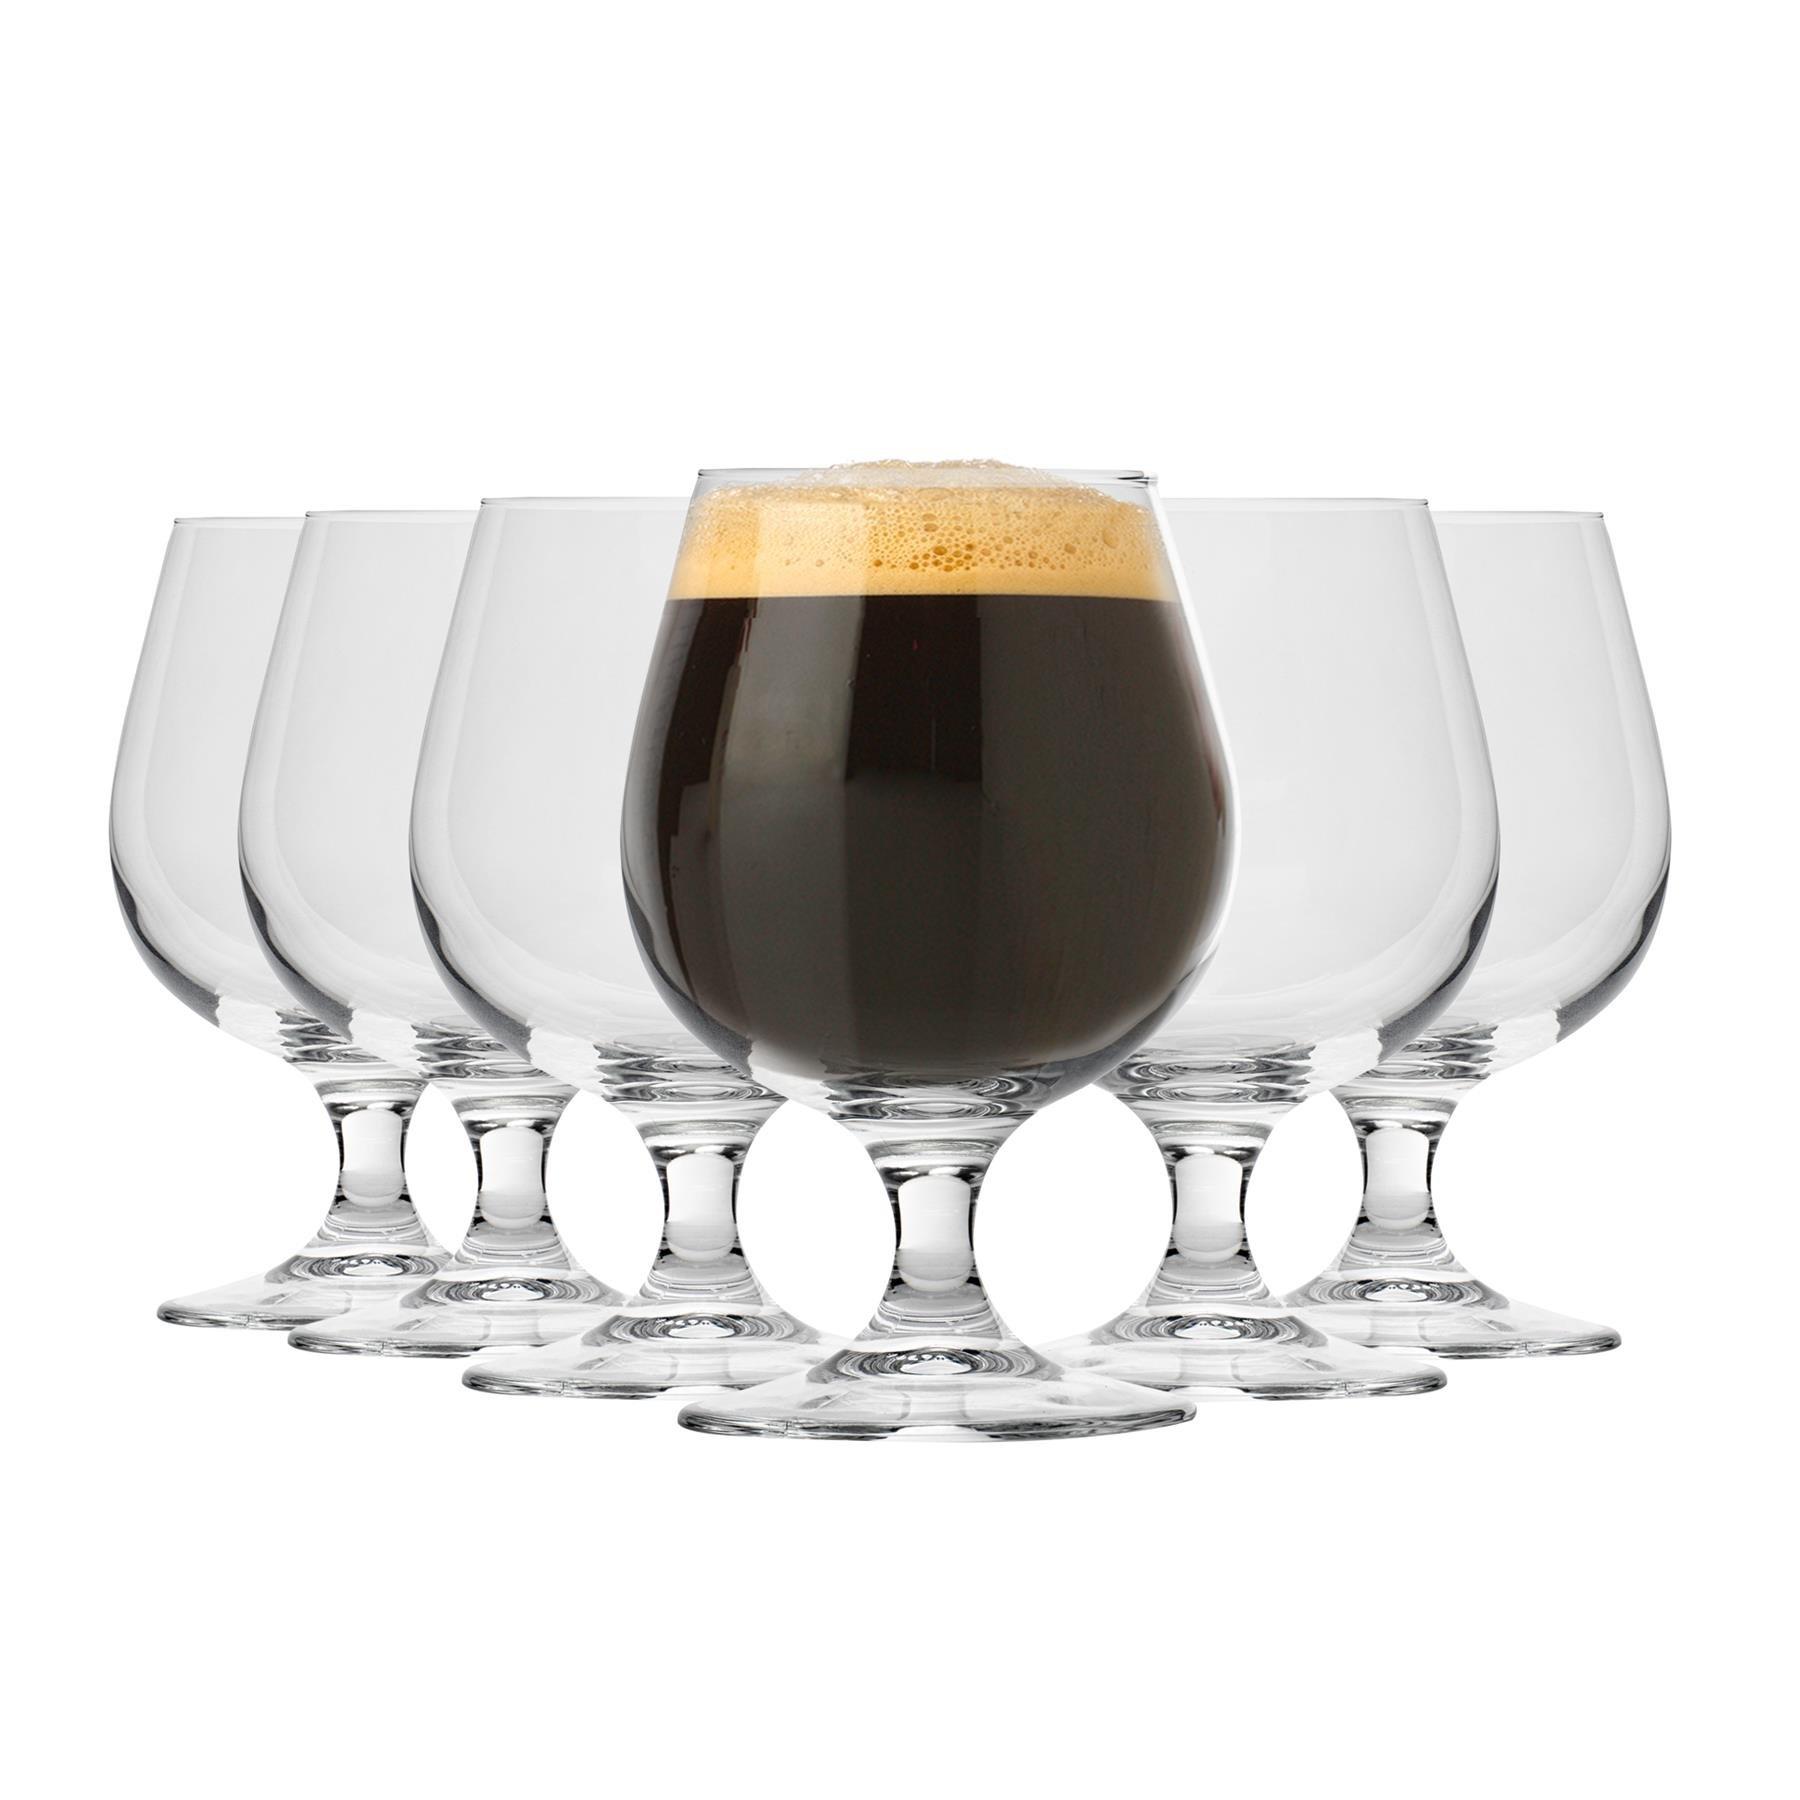 Snifter Beer Glasses - 530ml - Pack of 24